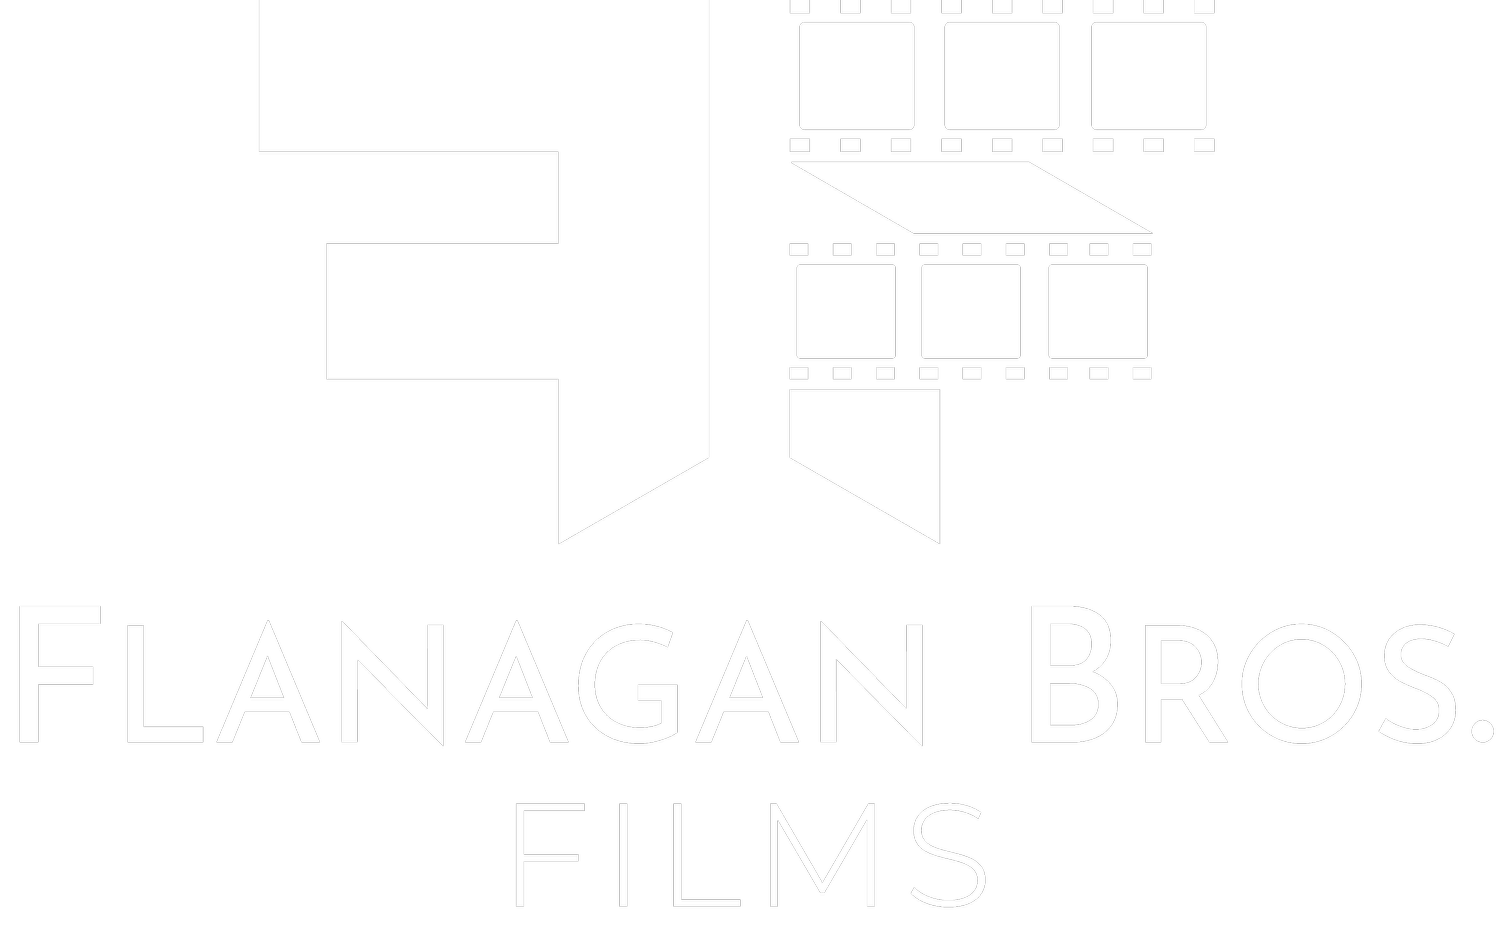 Flanagan Bros. Films